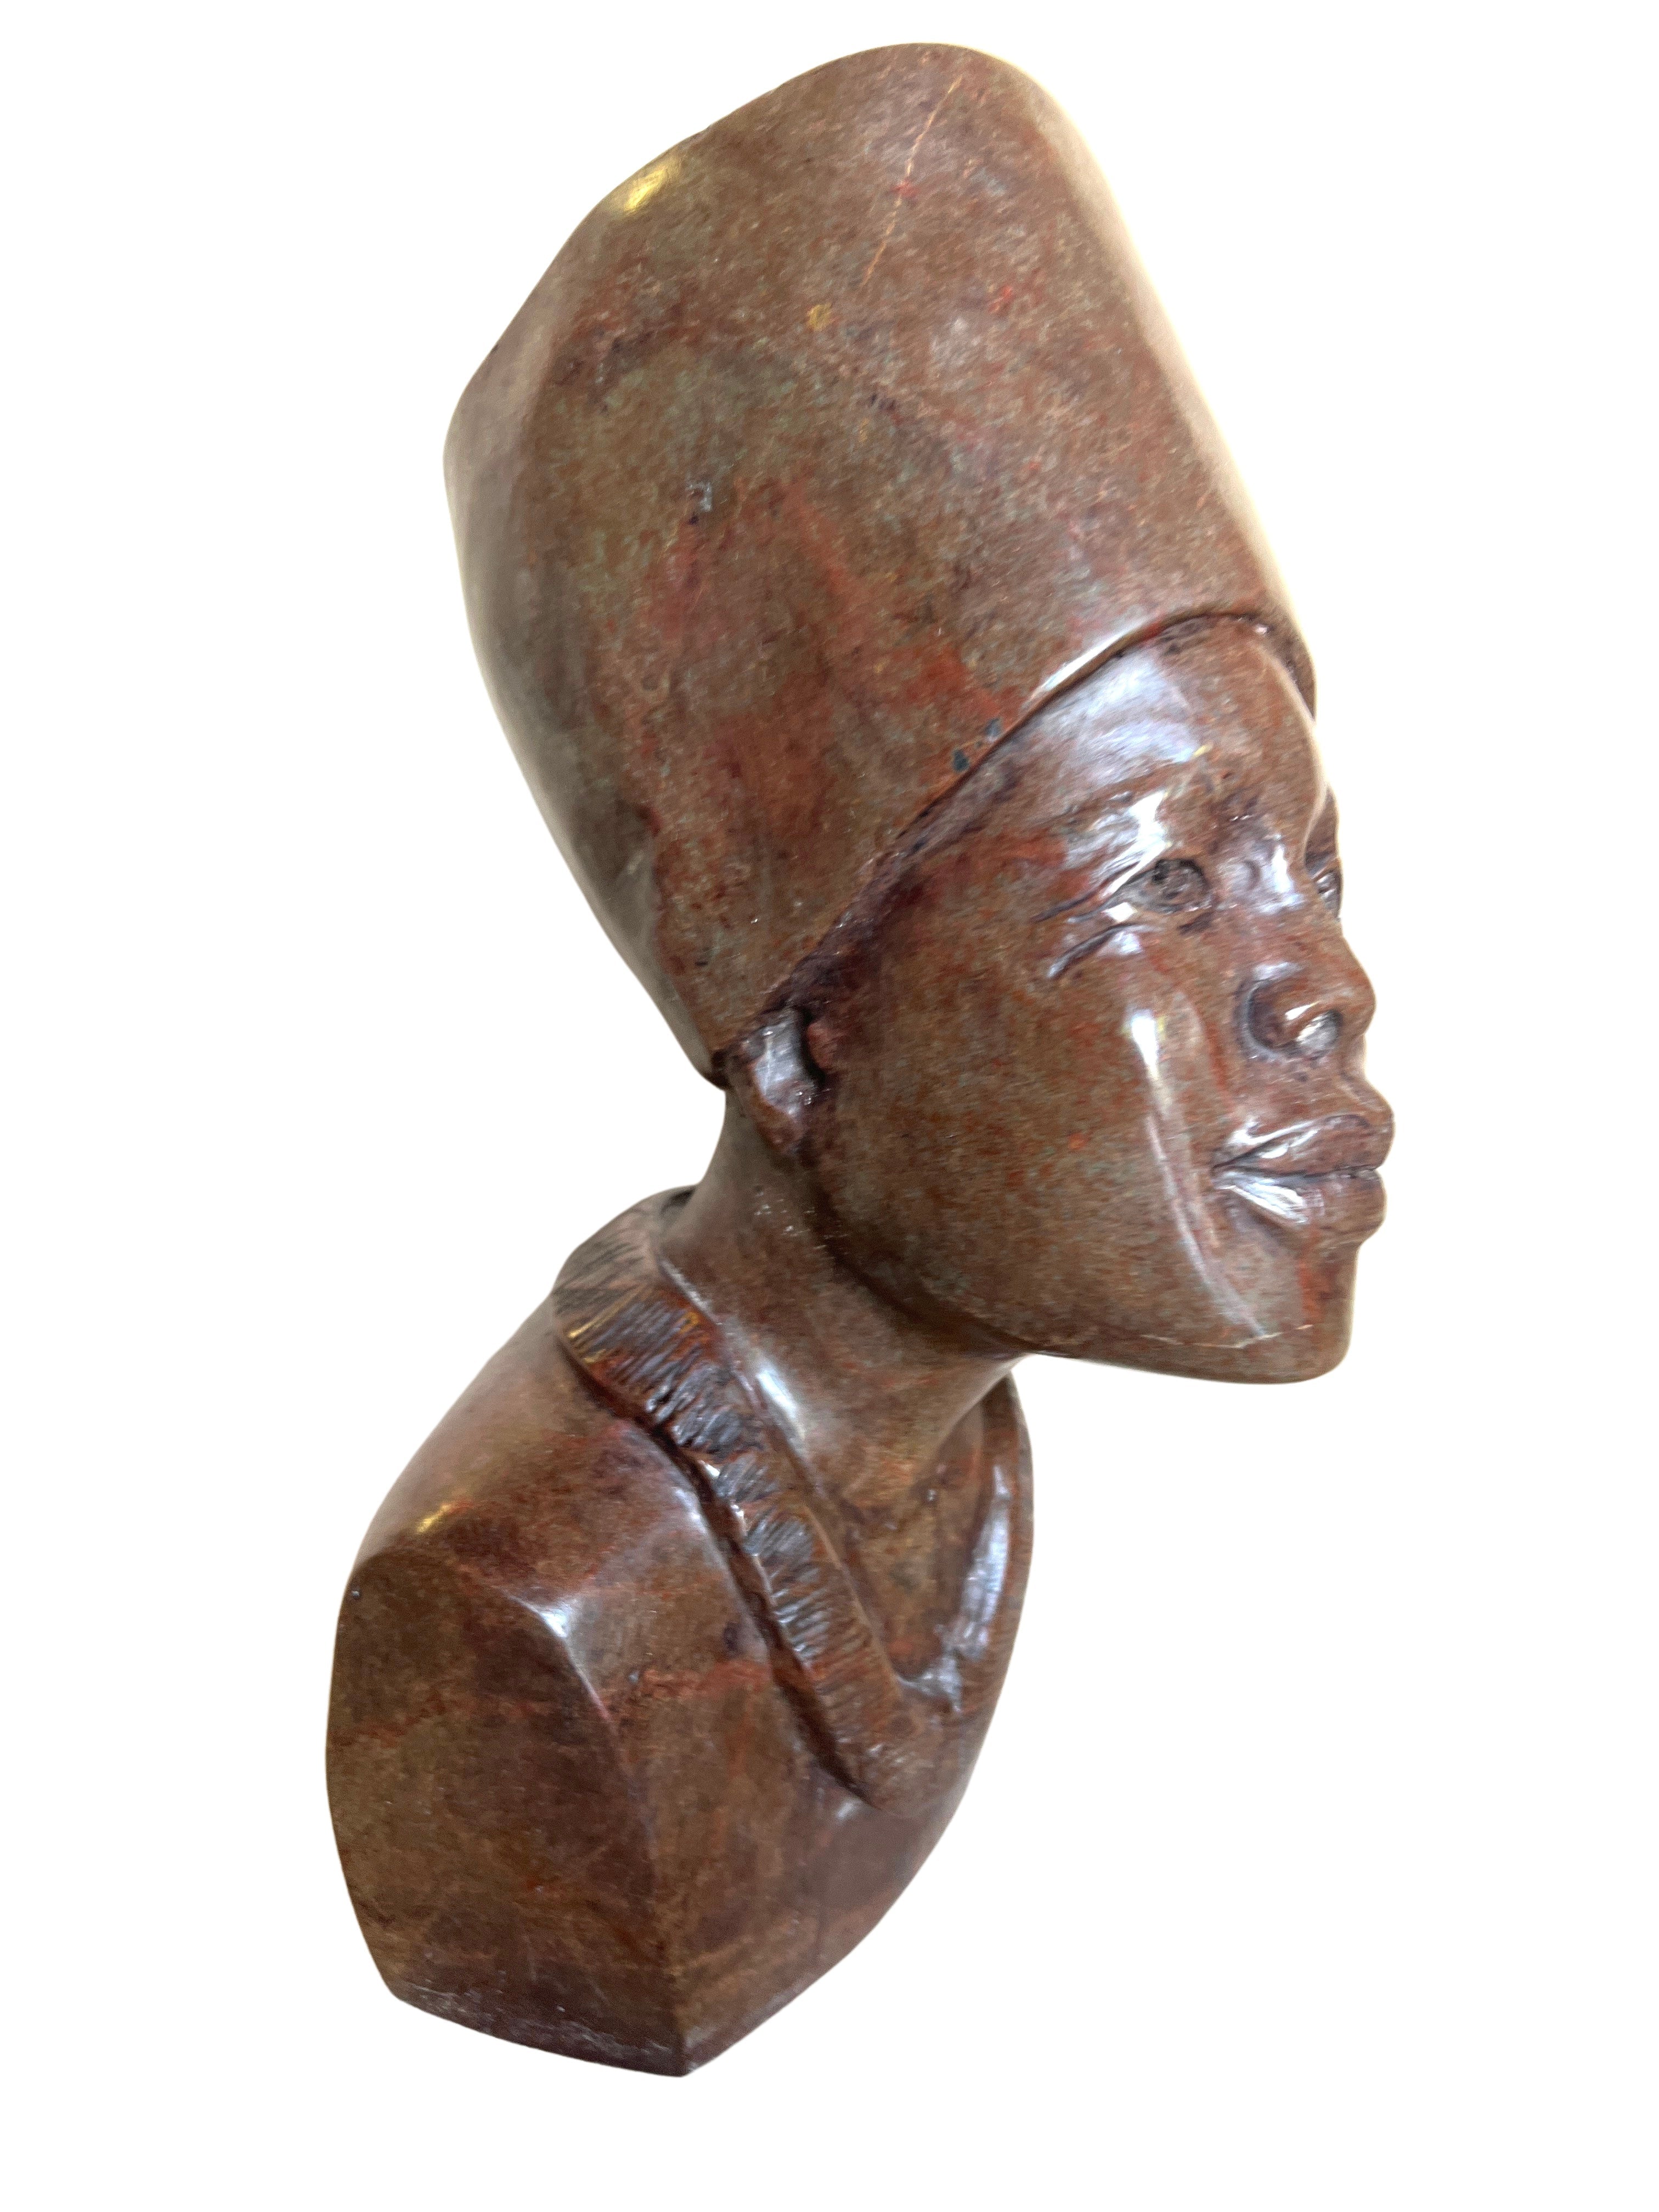 Shona Tribe Fruit Serpentine Woman With hat - Shona